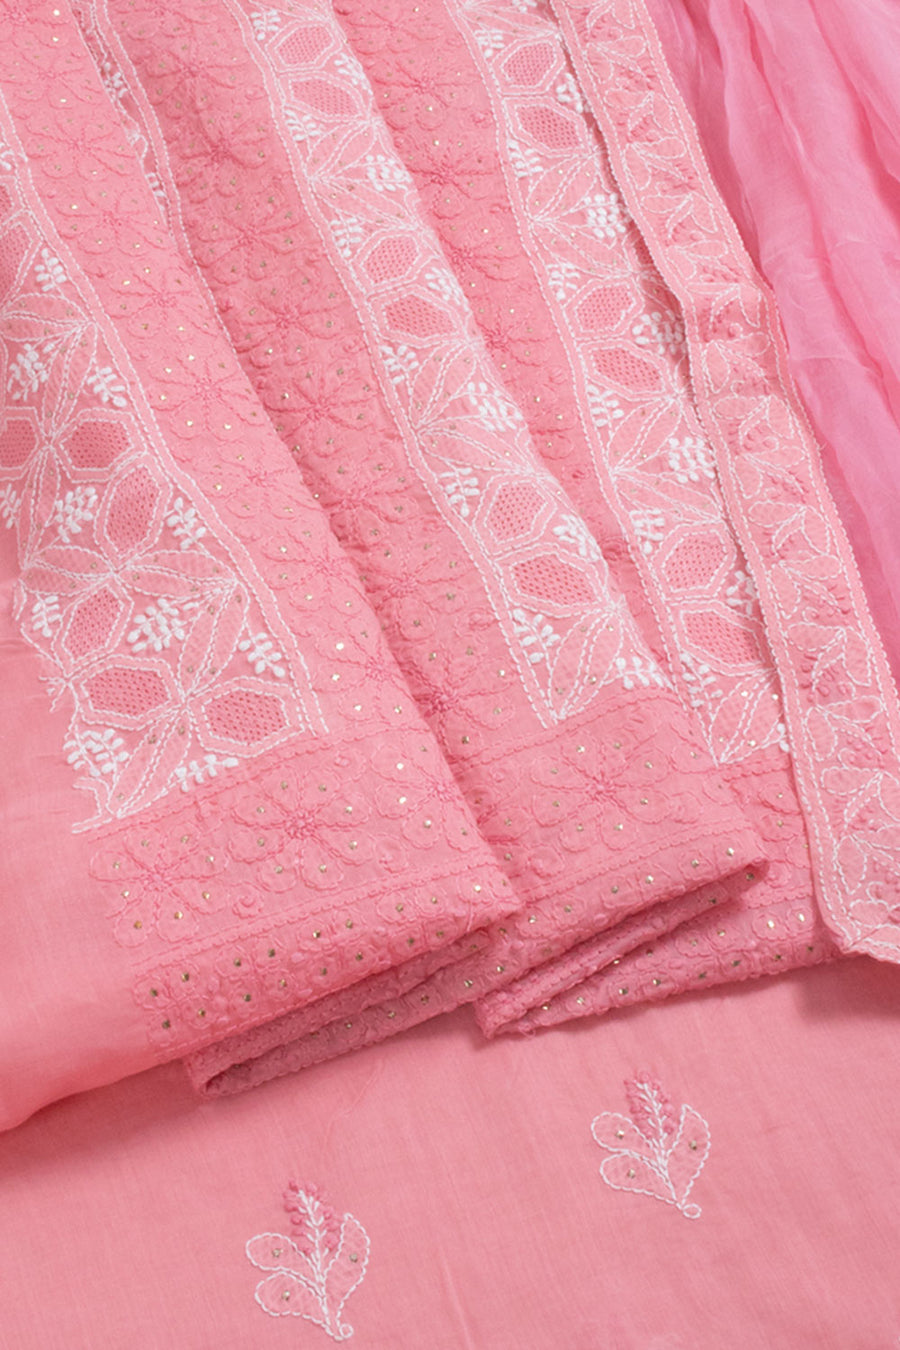 Hand Embroidered Chikankari Cotton 3-Piece Salwar Suit Material with Mukaish Work and Chiffon Crochet Border Dupatta